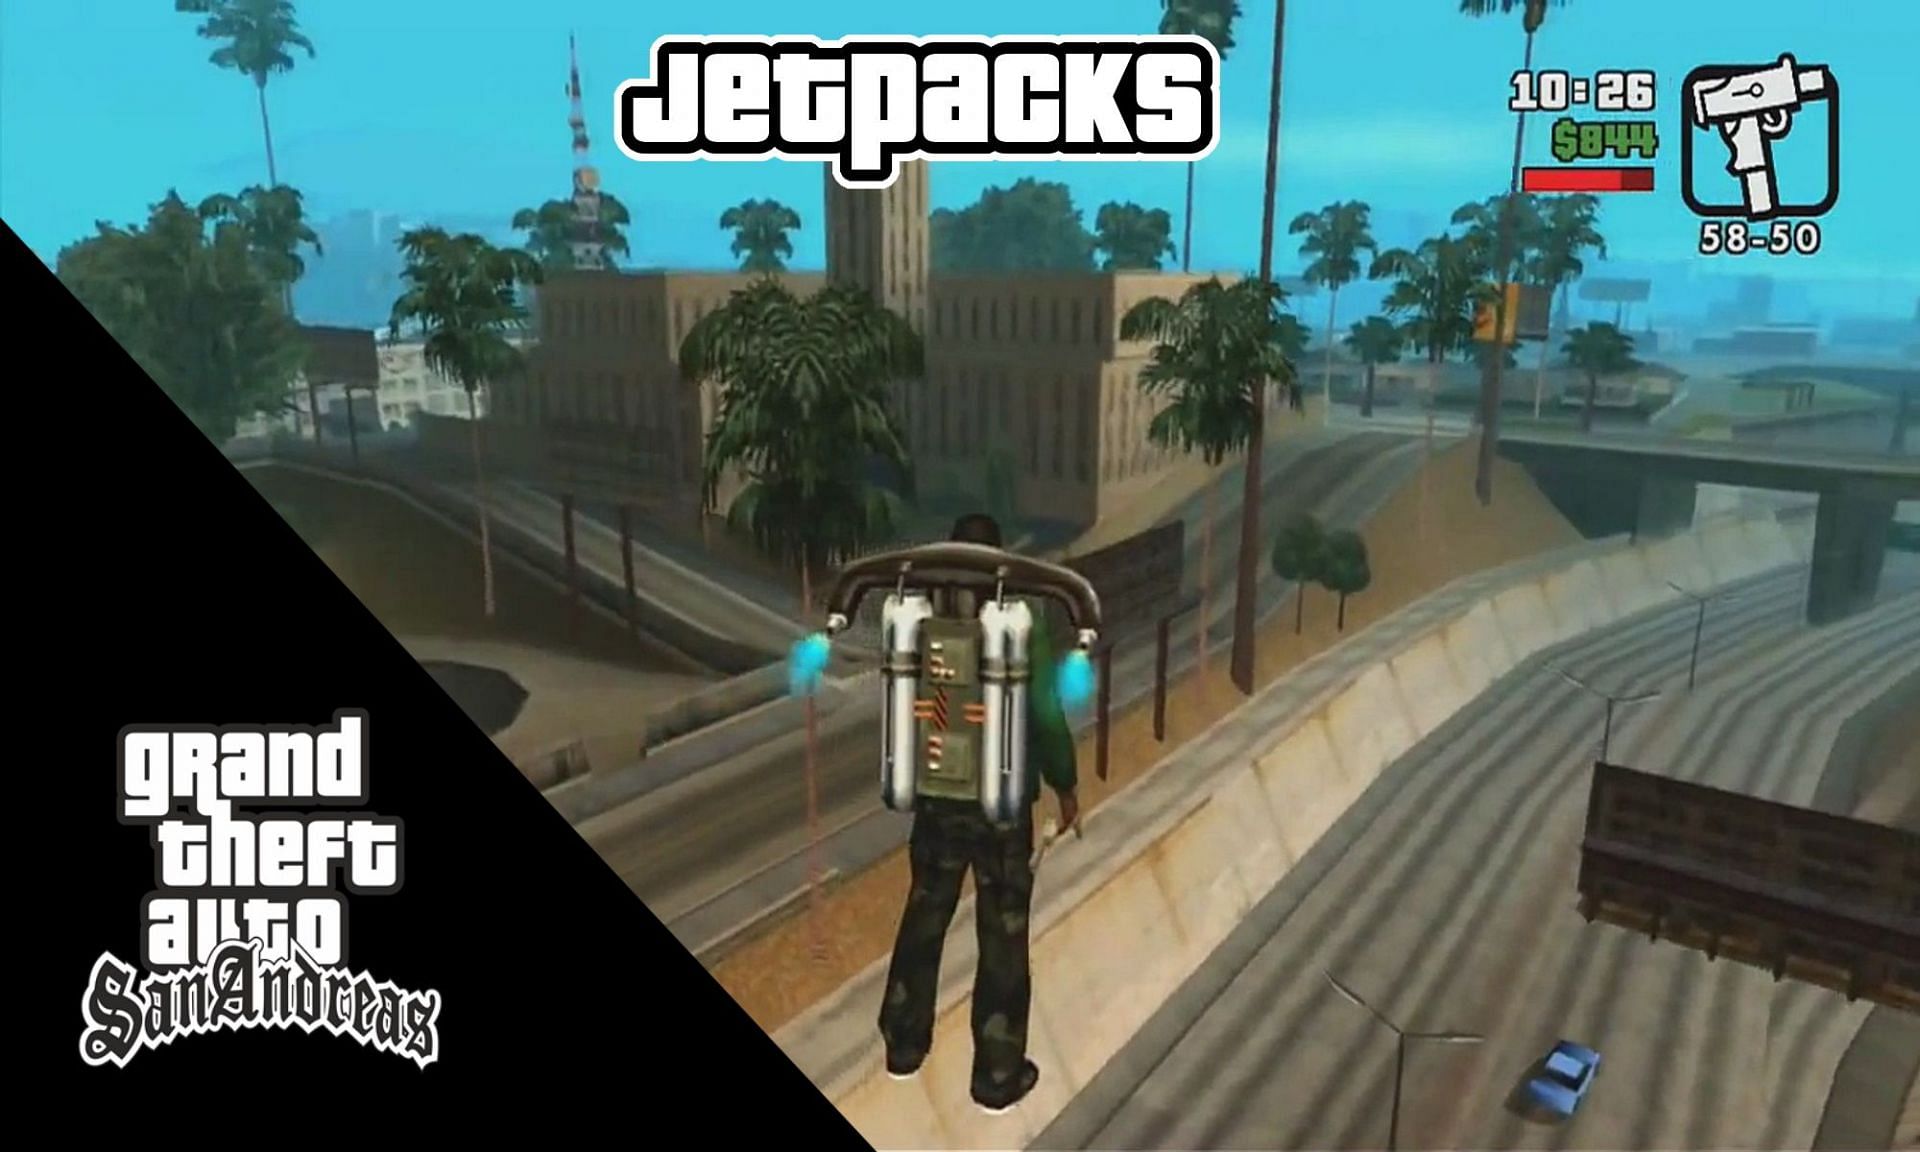 Jetpack, Grand Theft Auto Wiki